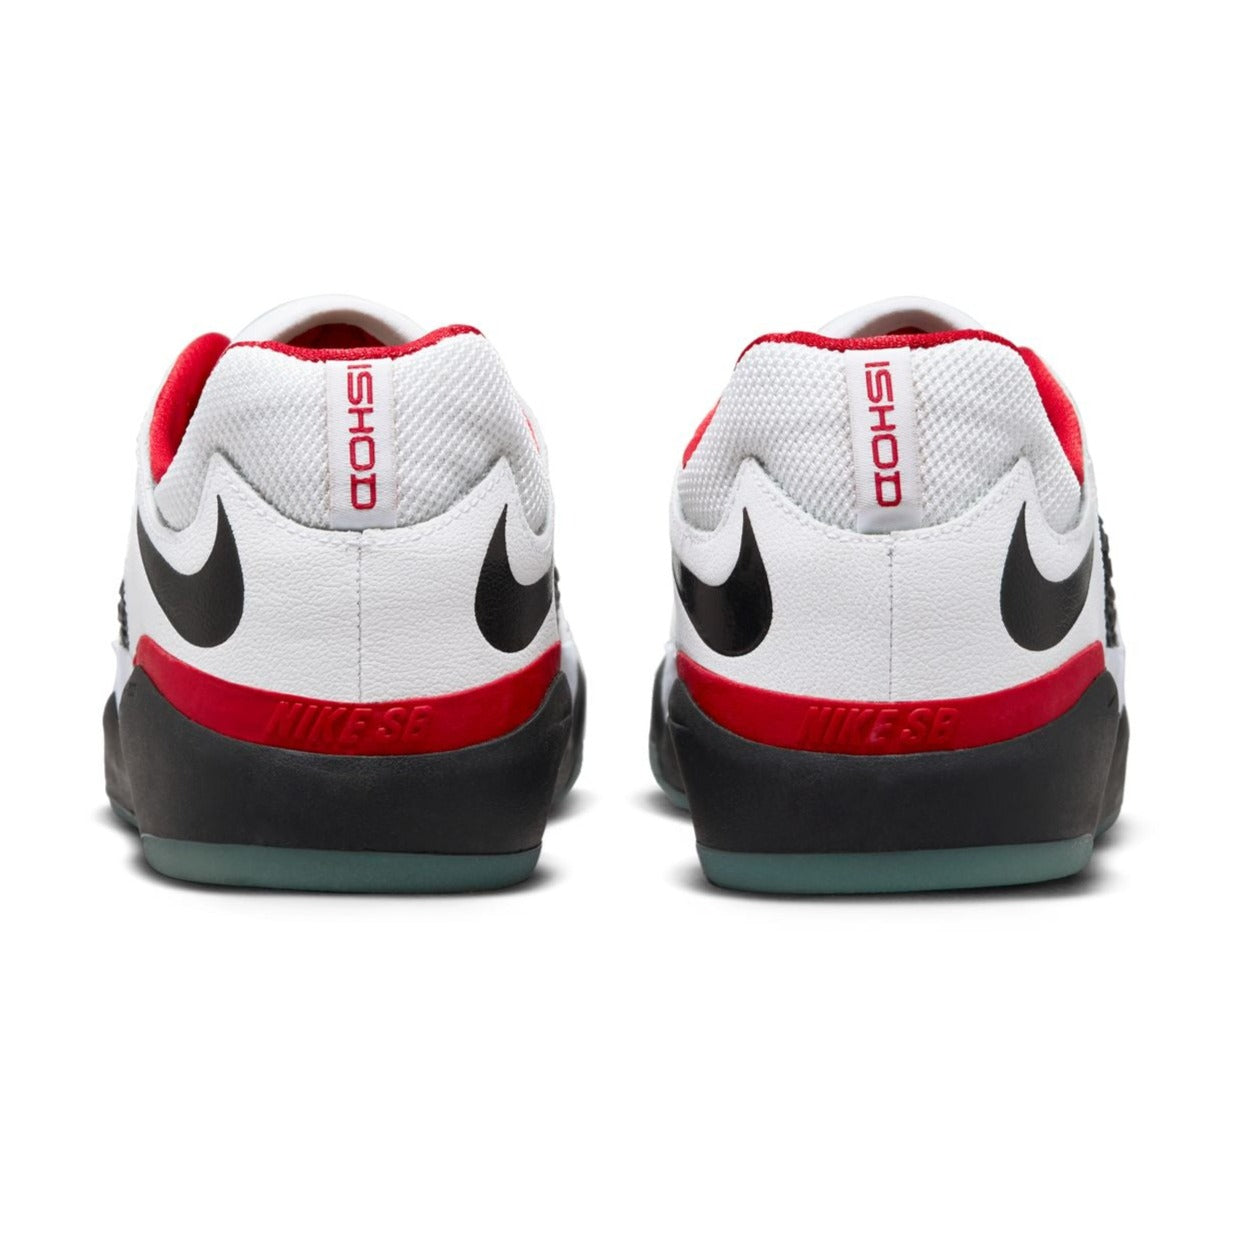 White/Black Premium Ishod Nike SB Skate Shoe Back